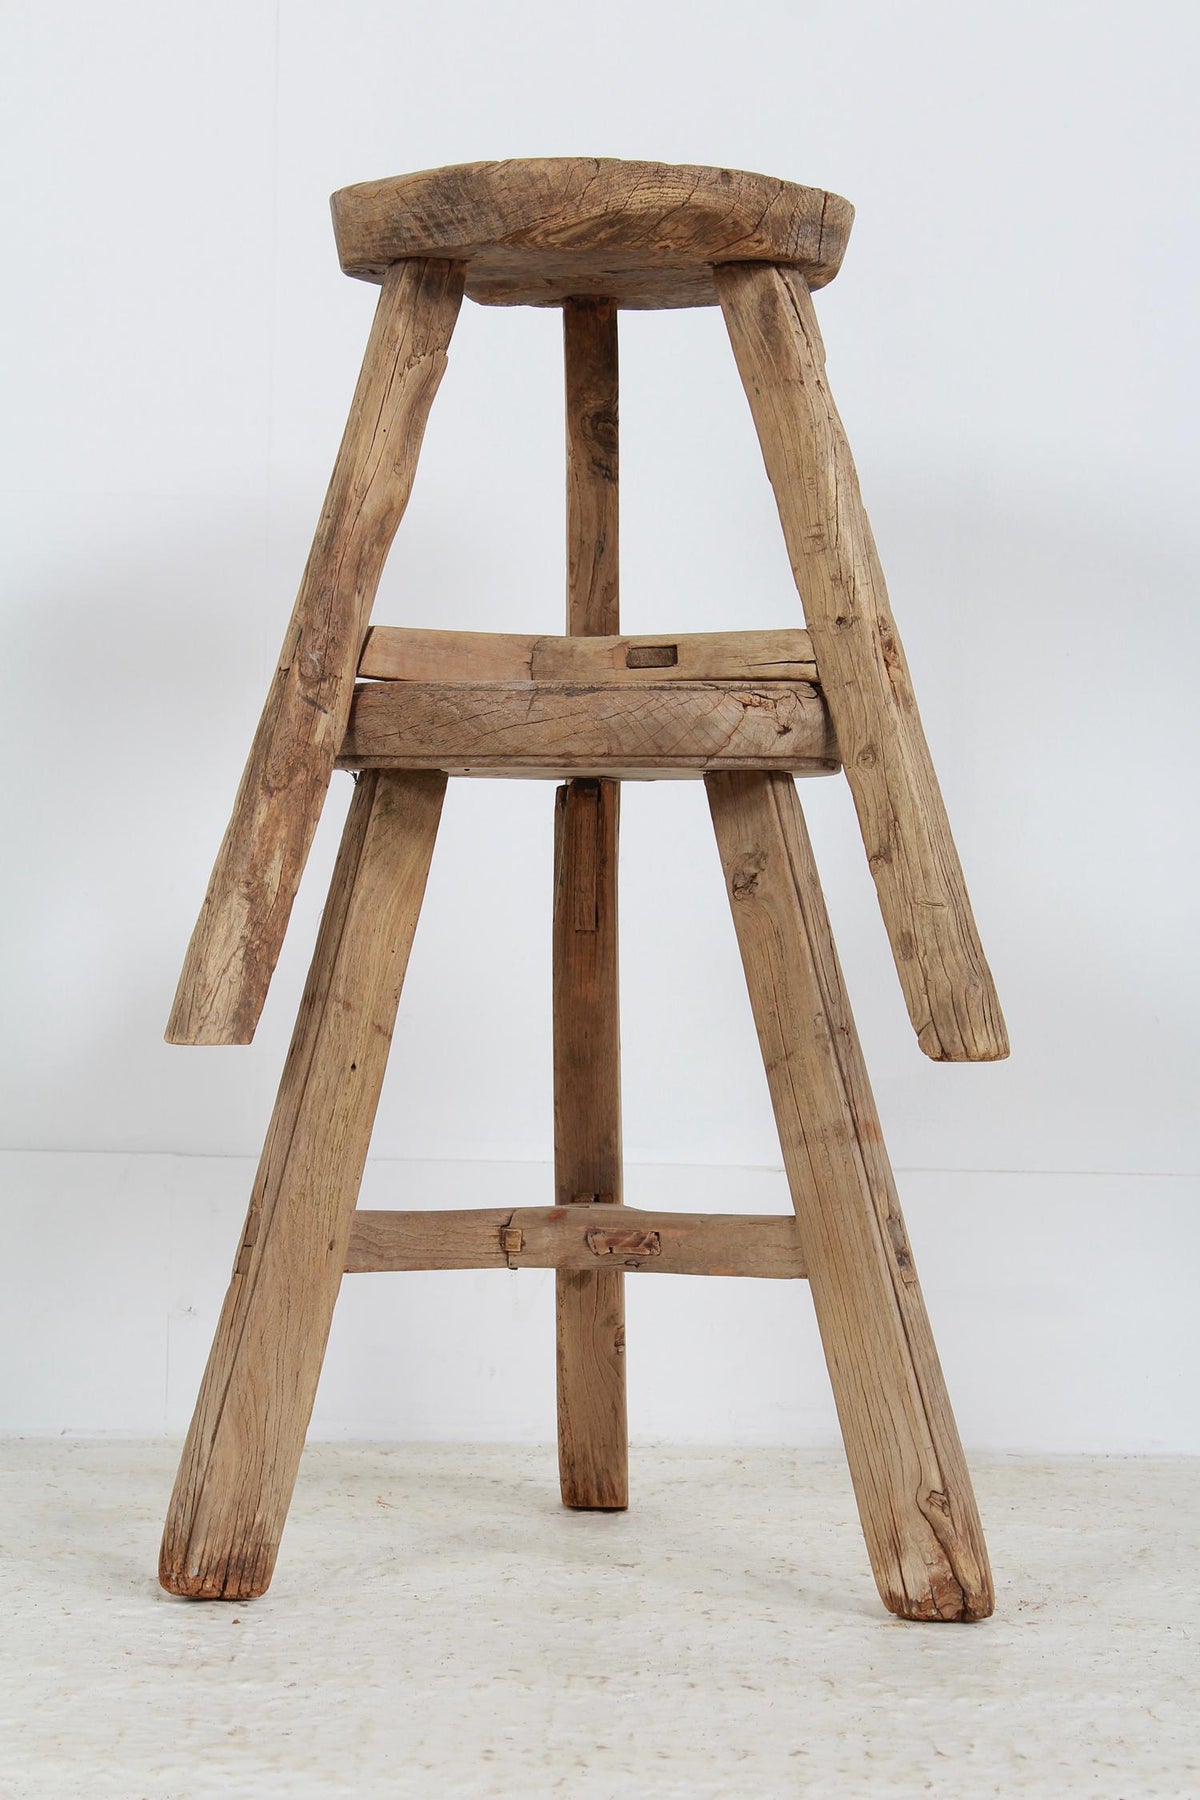 Rustic 19thC Century Three-Legged Pine Stools/Tables